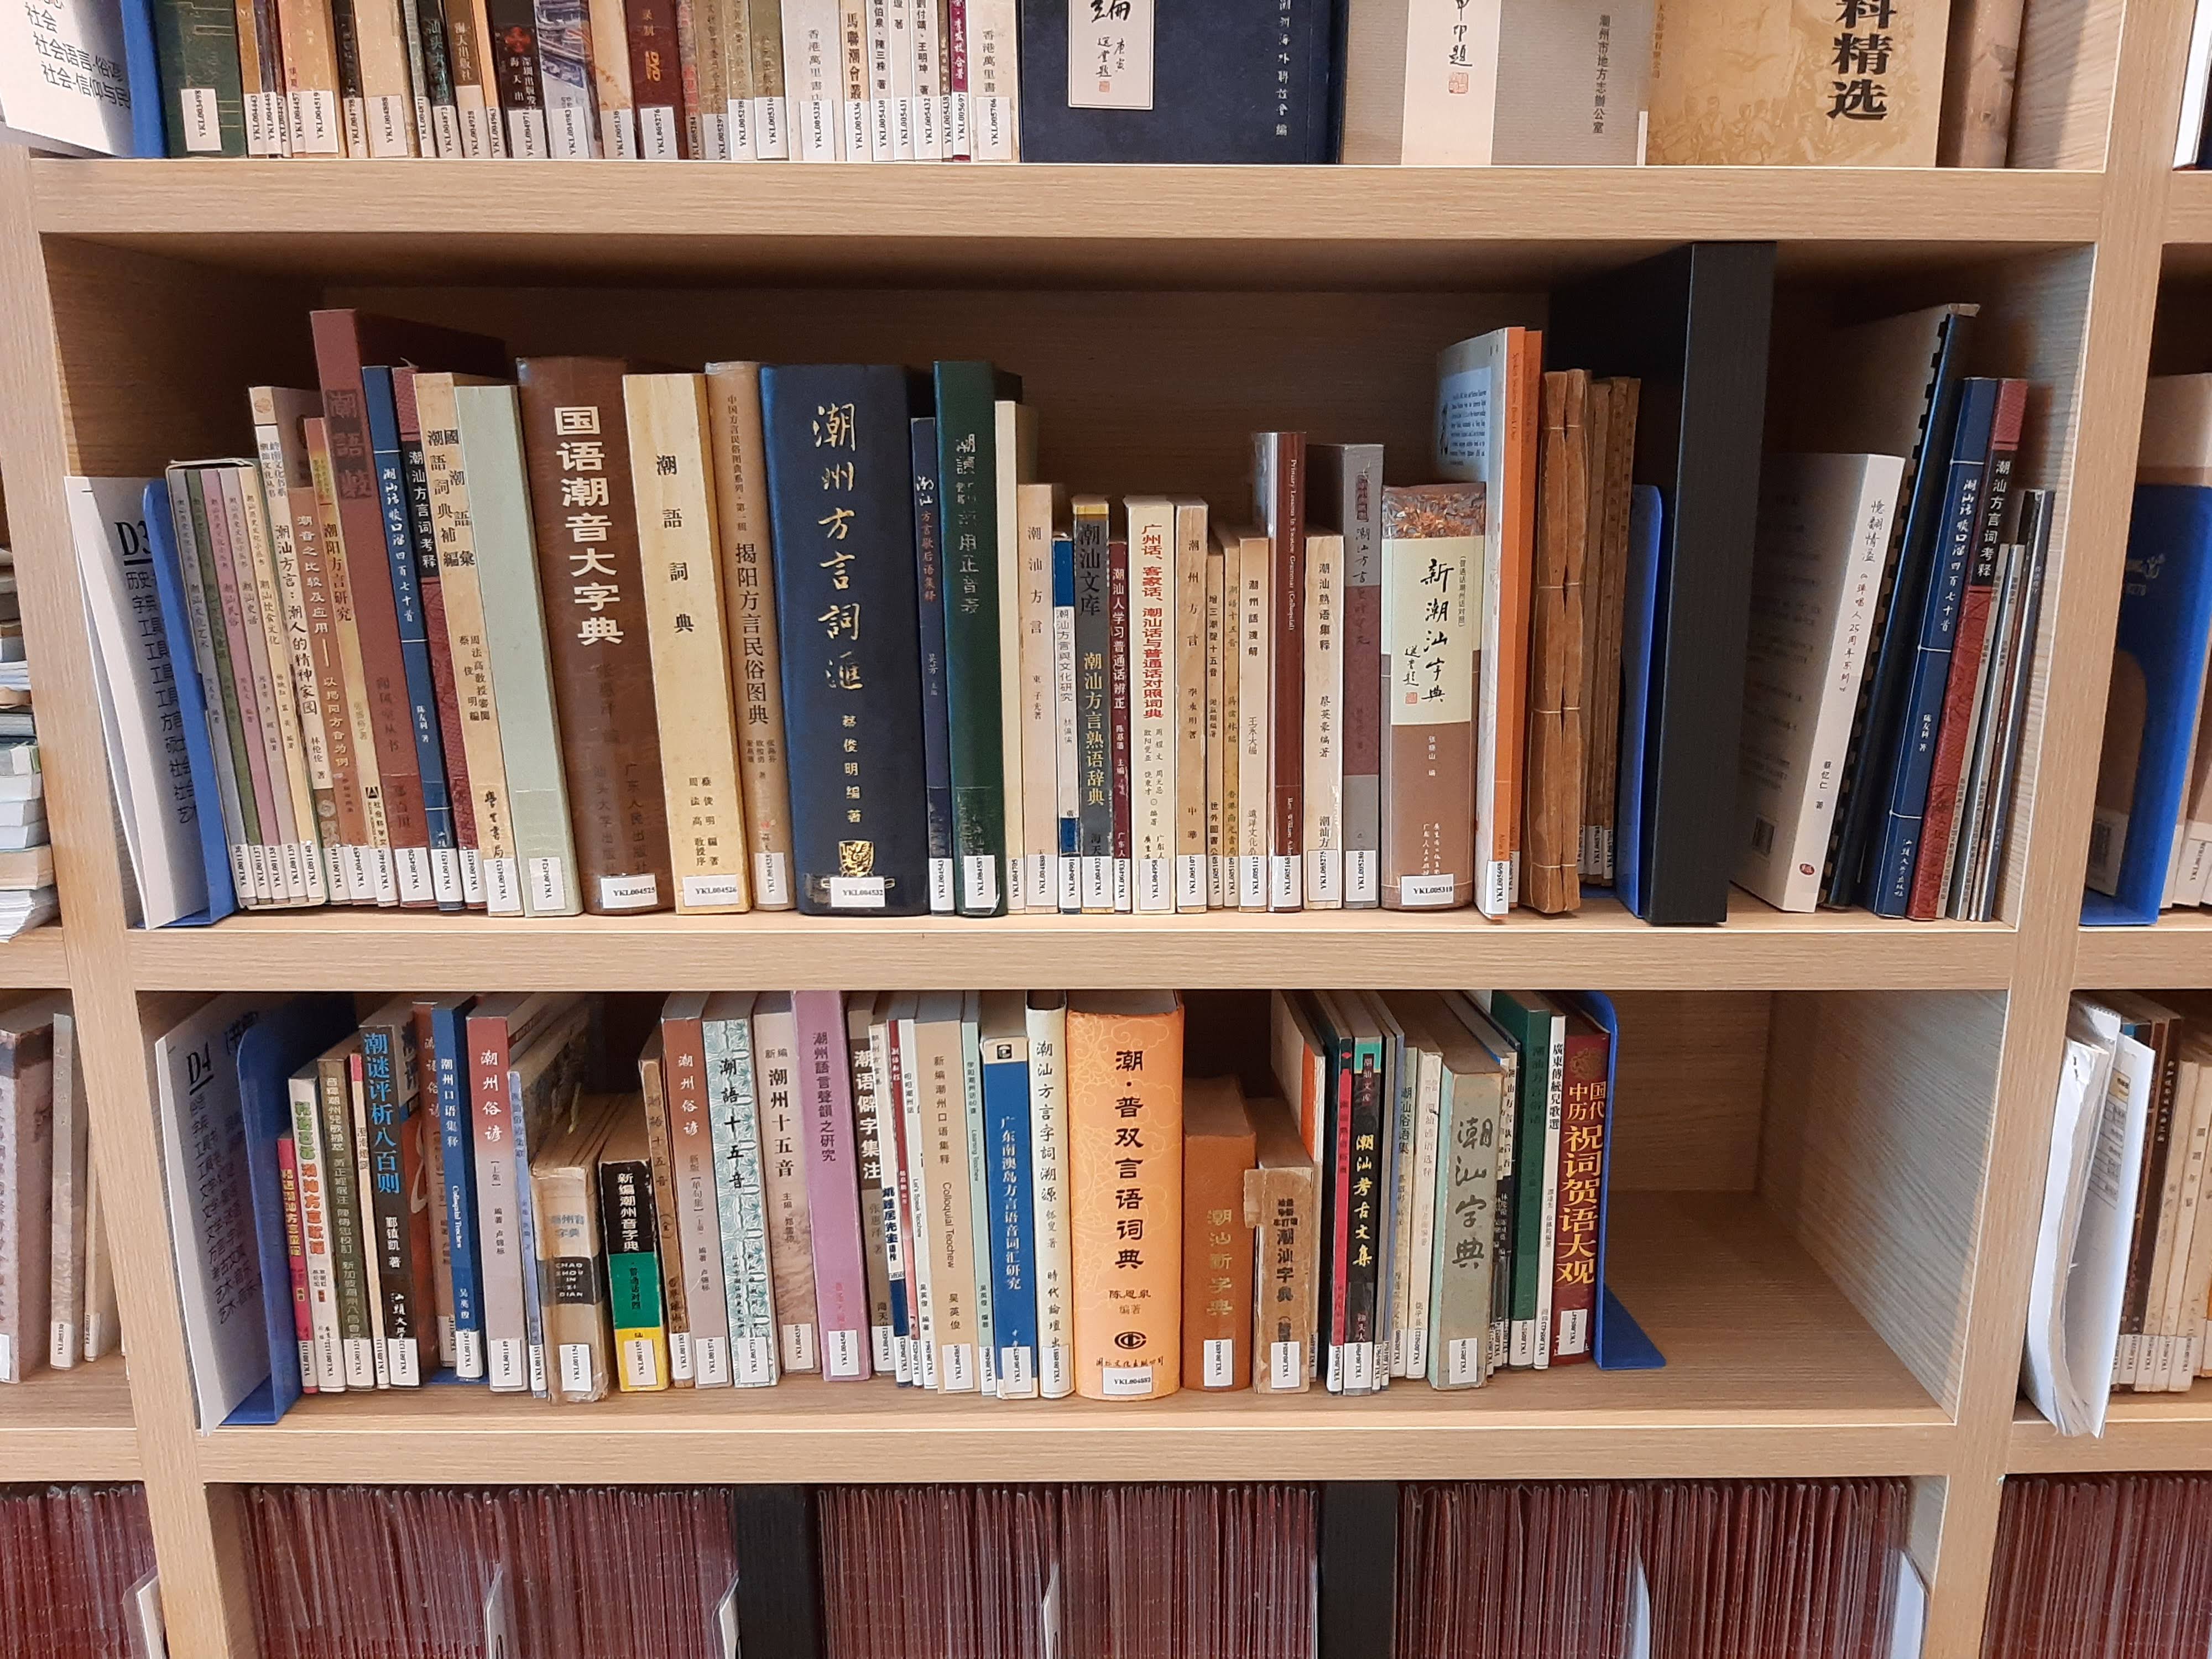 Bookshelf with Teochew books and vinyl records